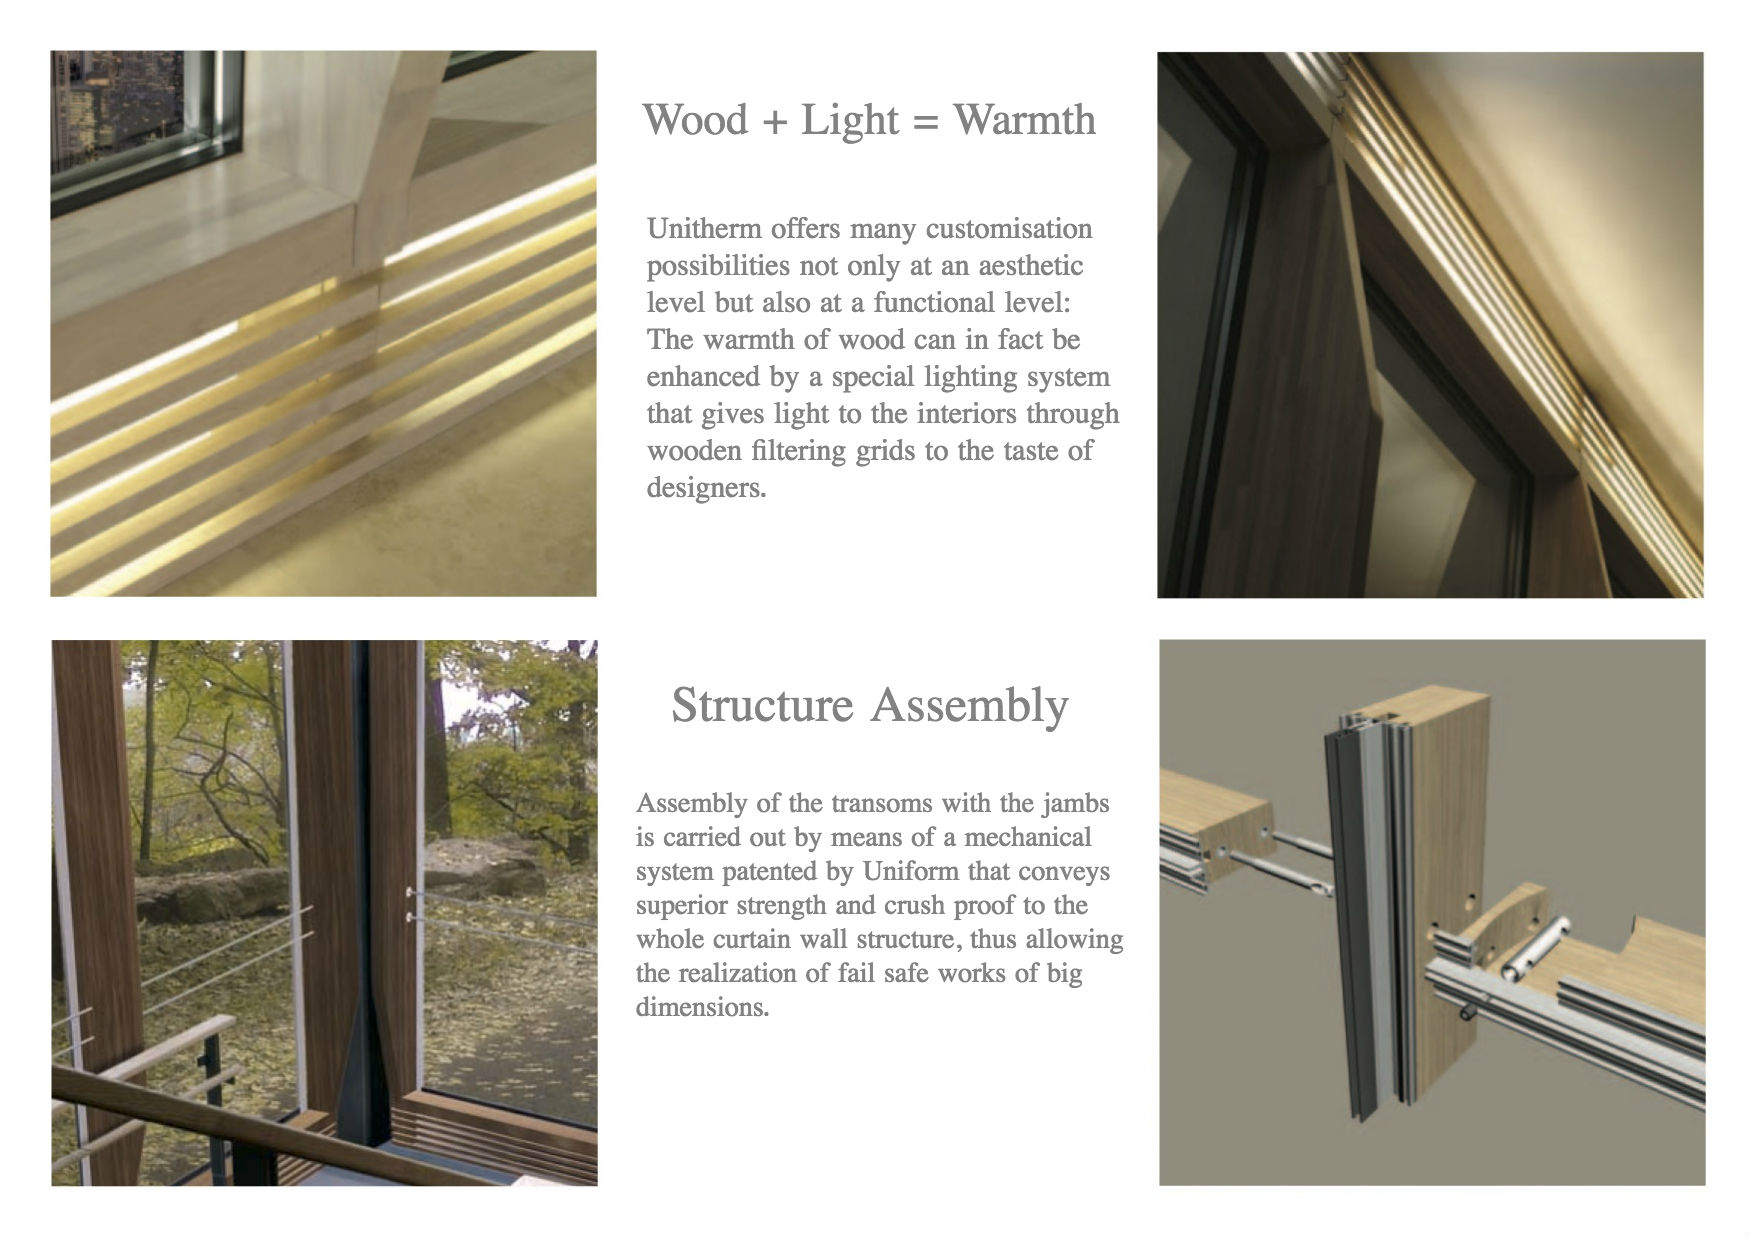 Wood-Aluminum Curtain Wall Systems